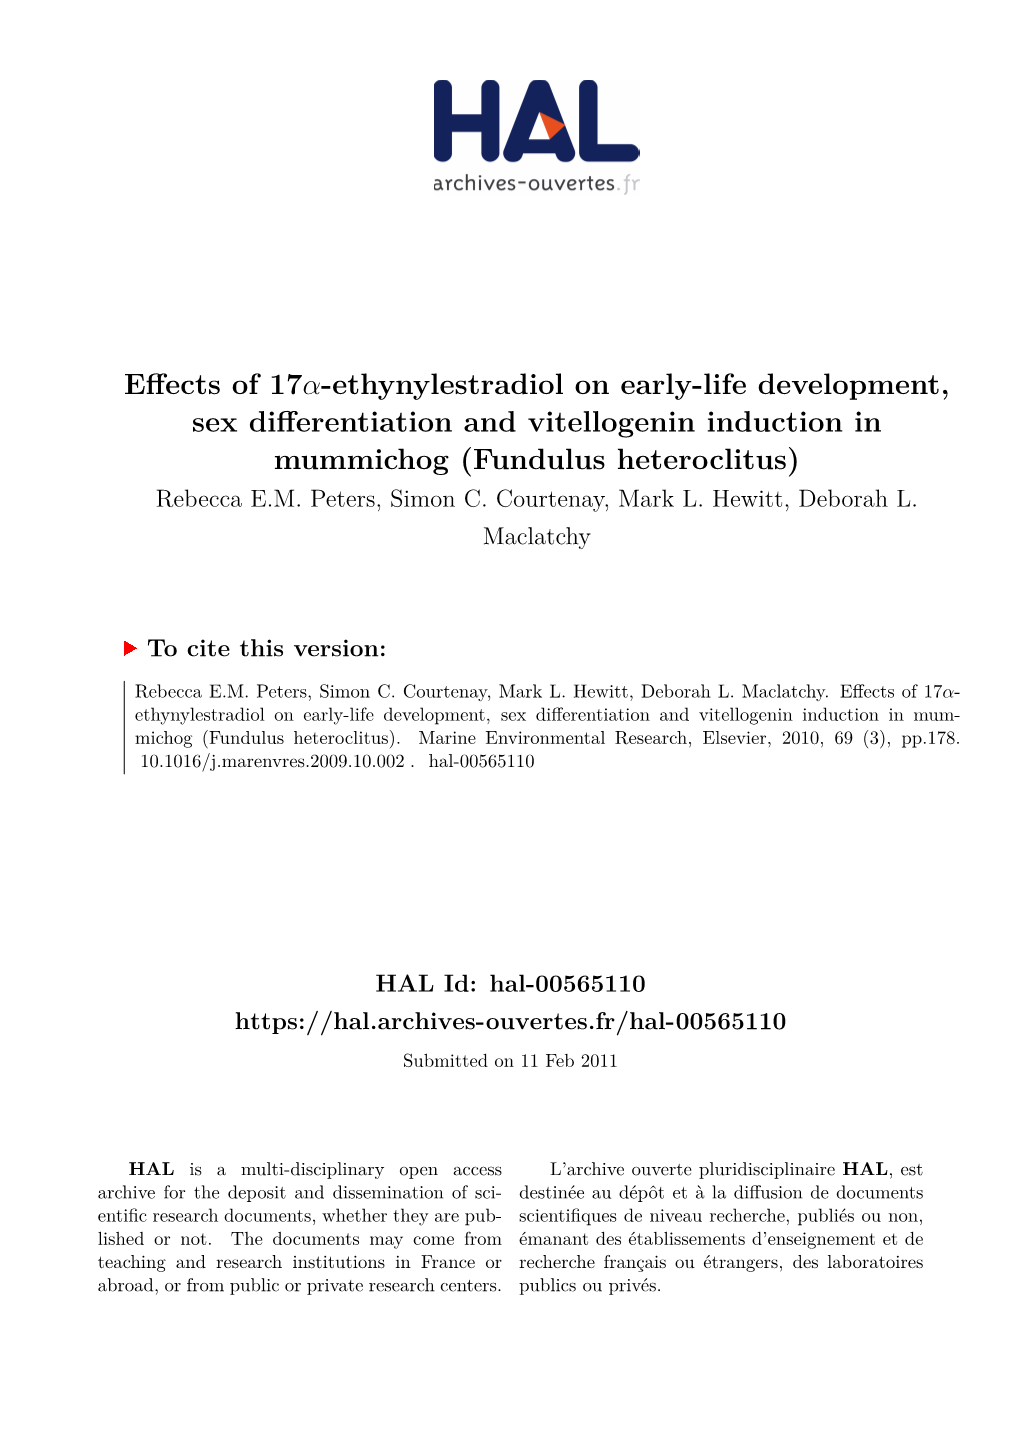 Effects of 17Α-Ethynylestradiol on Early-Life Development, Sex Differentiation and Vitellogenin Induction in Mummichog (Fundulus Heteroclitus) Rebecca E.M